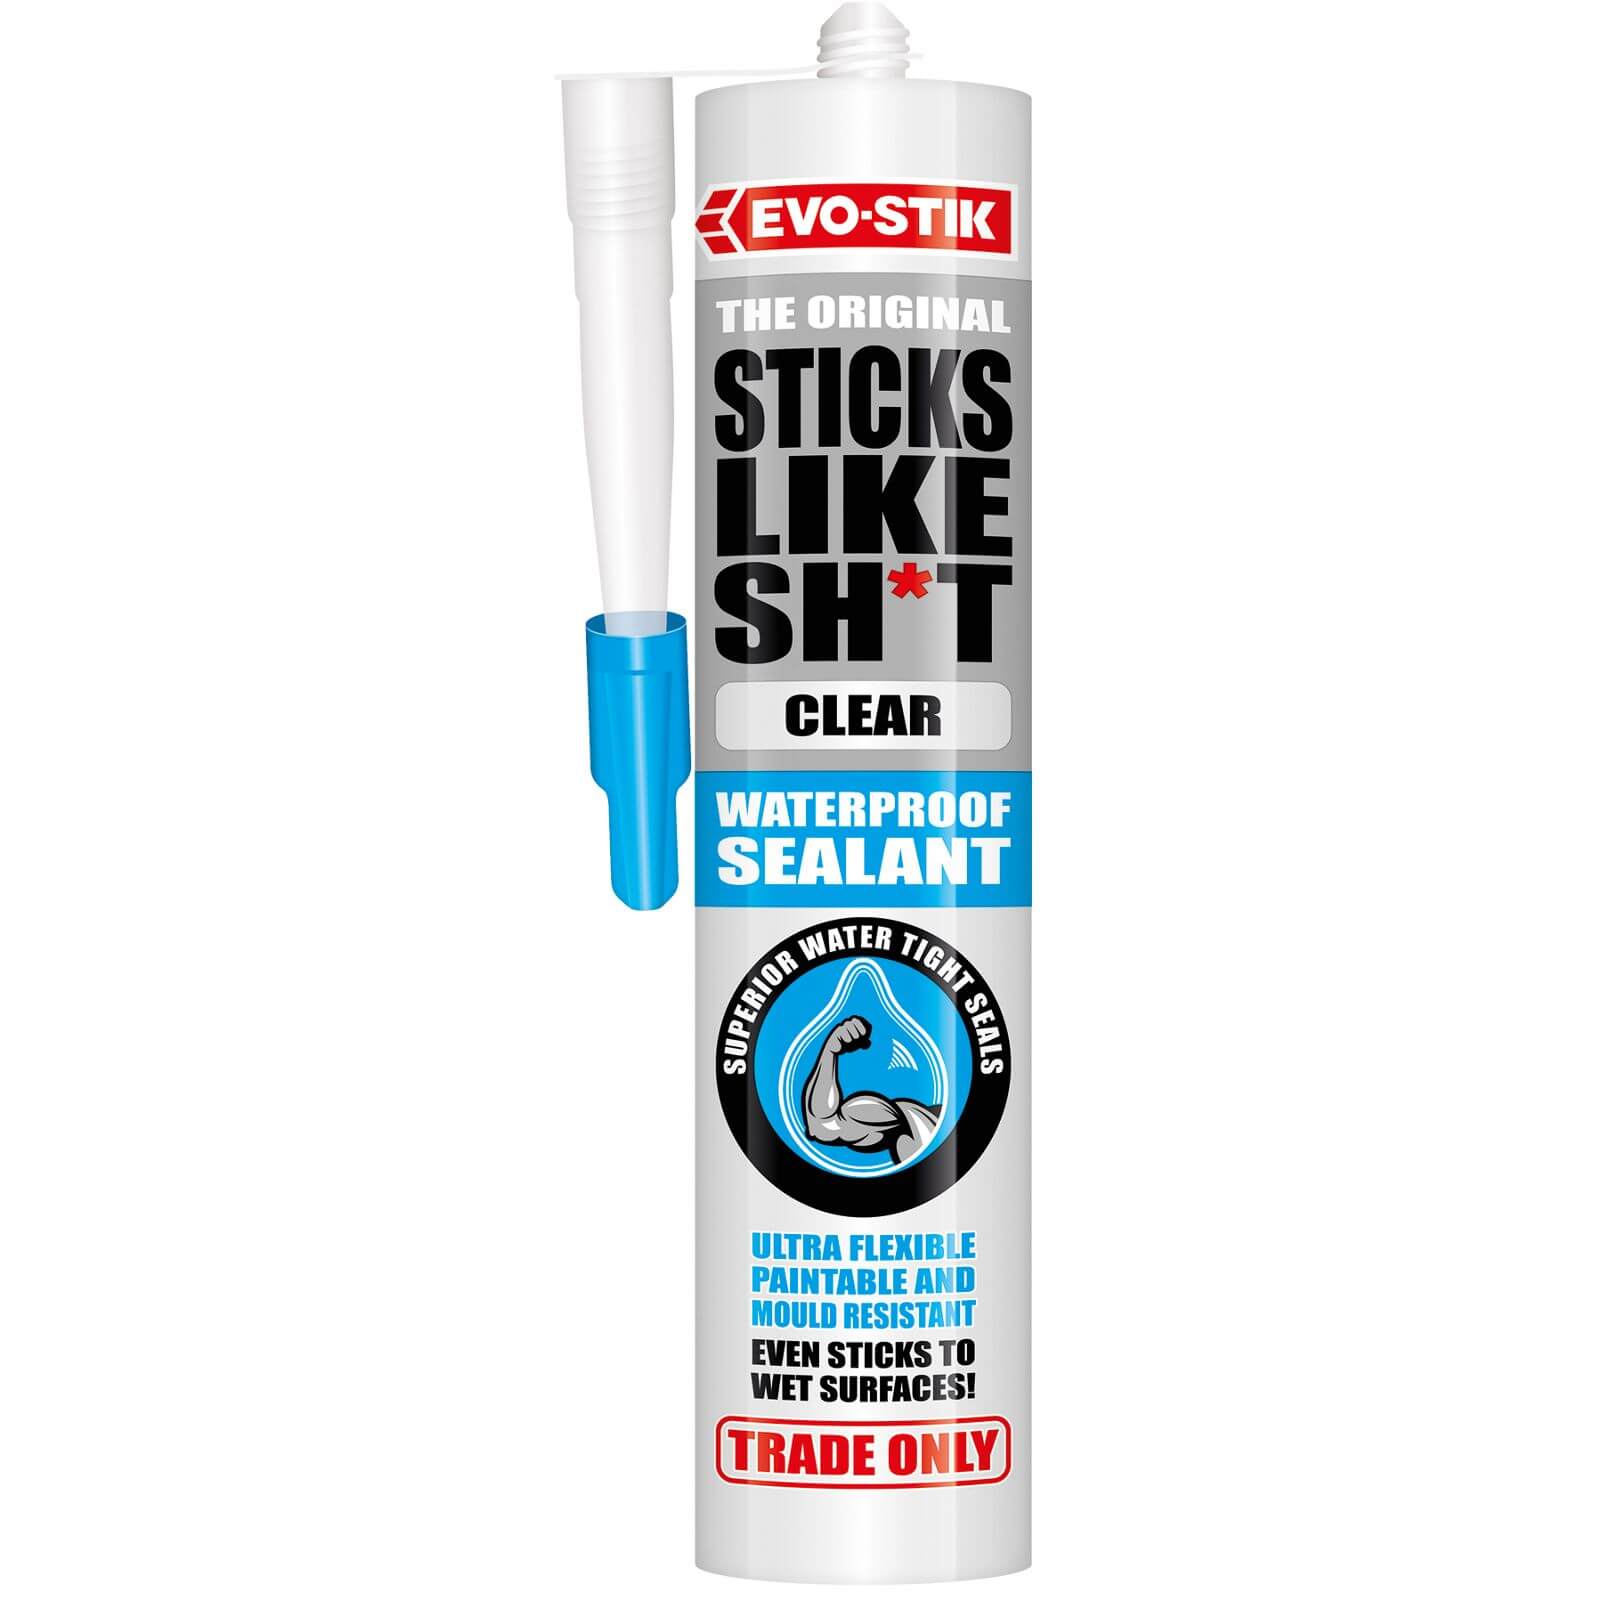 Evo-stik Sls Waterproof Sealant - Clear